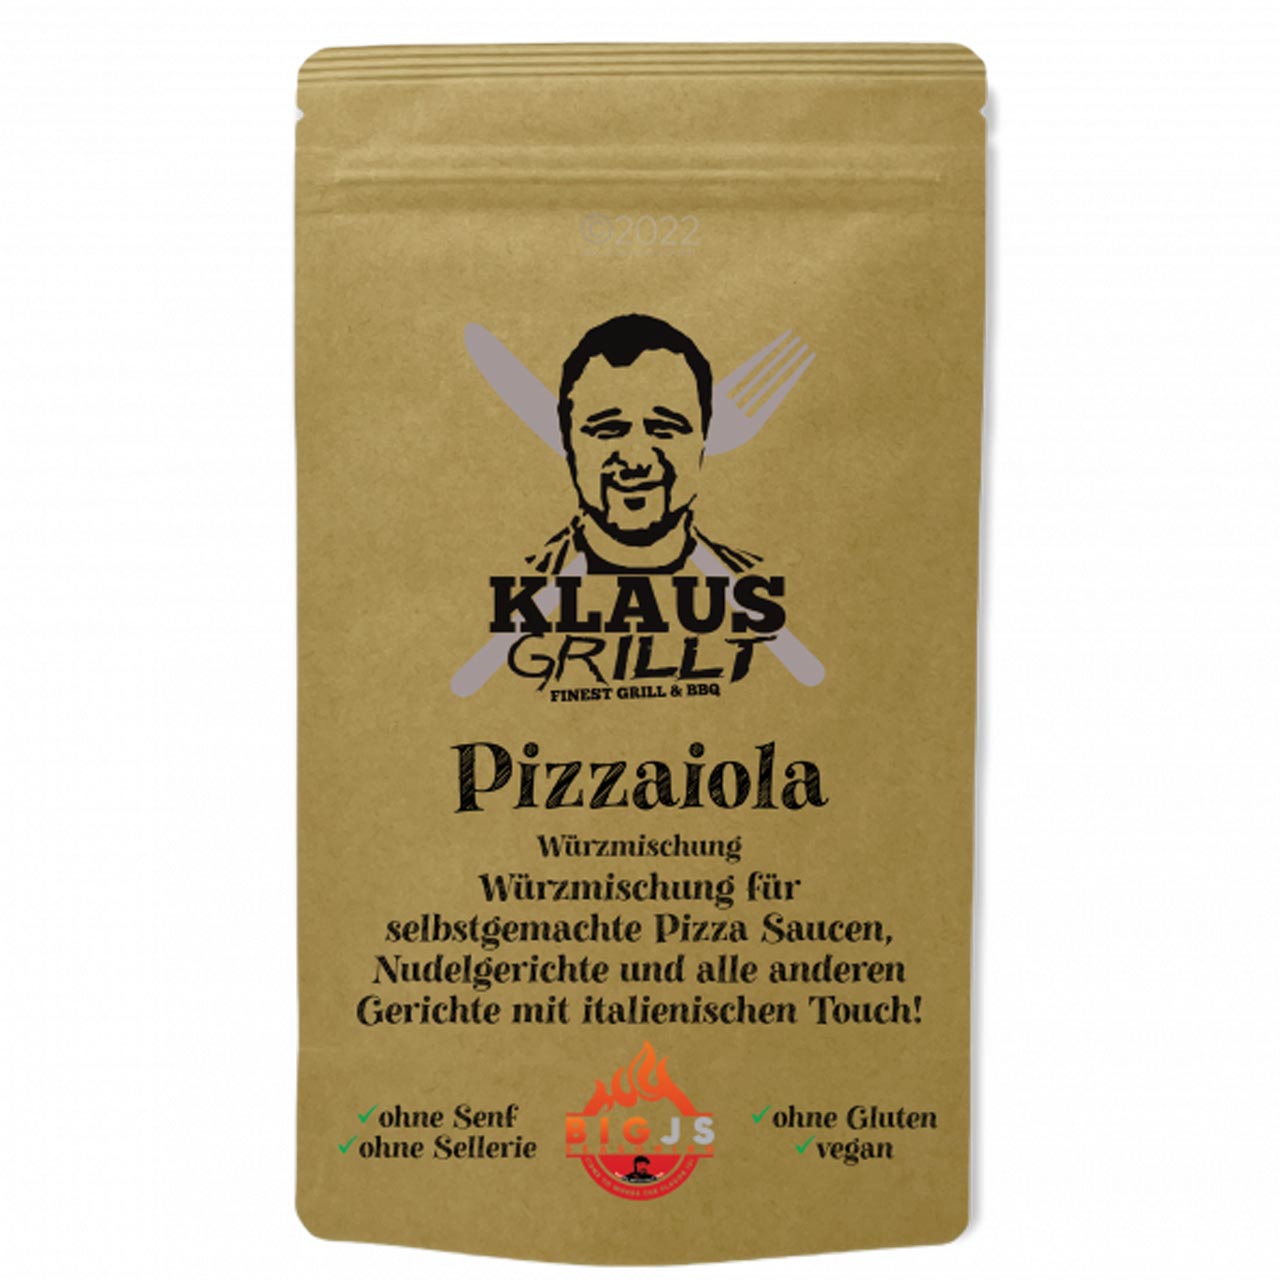 Klaus Grillt - Pizzaiola 450 g Standbeutel